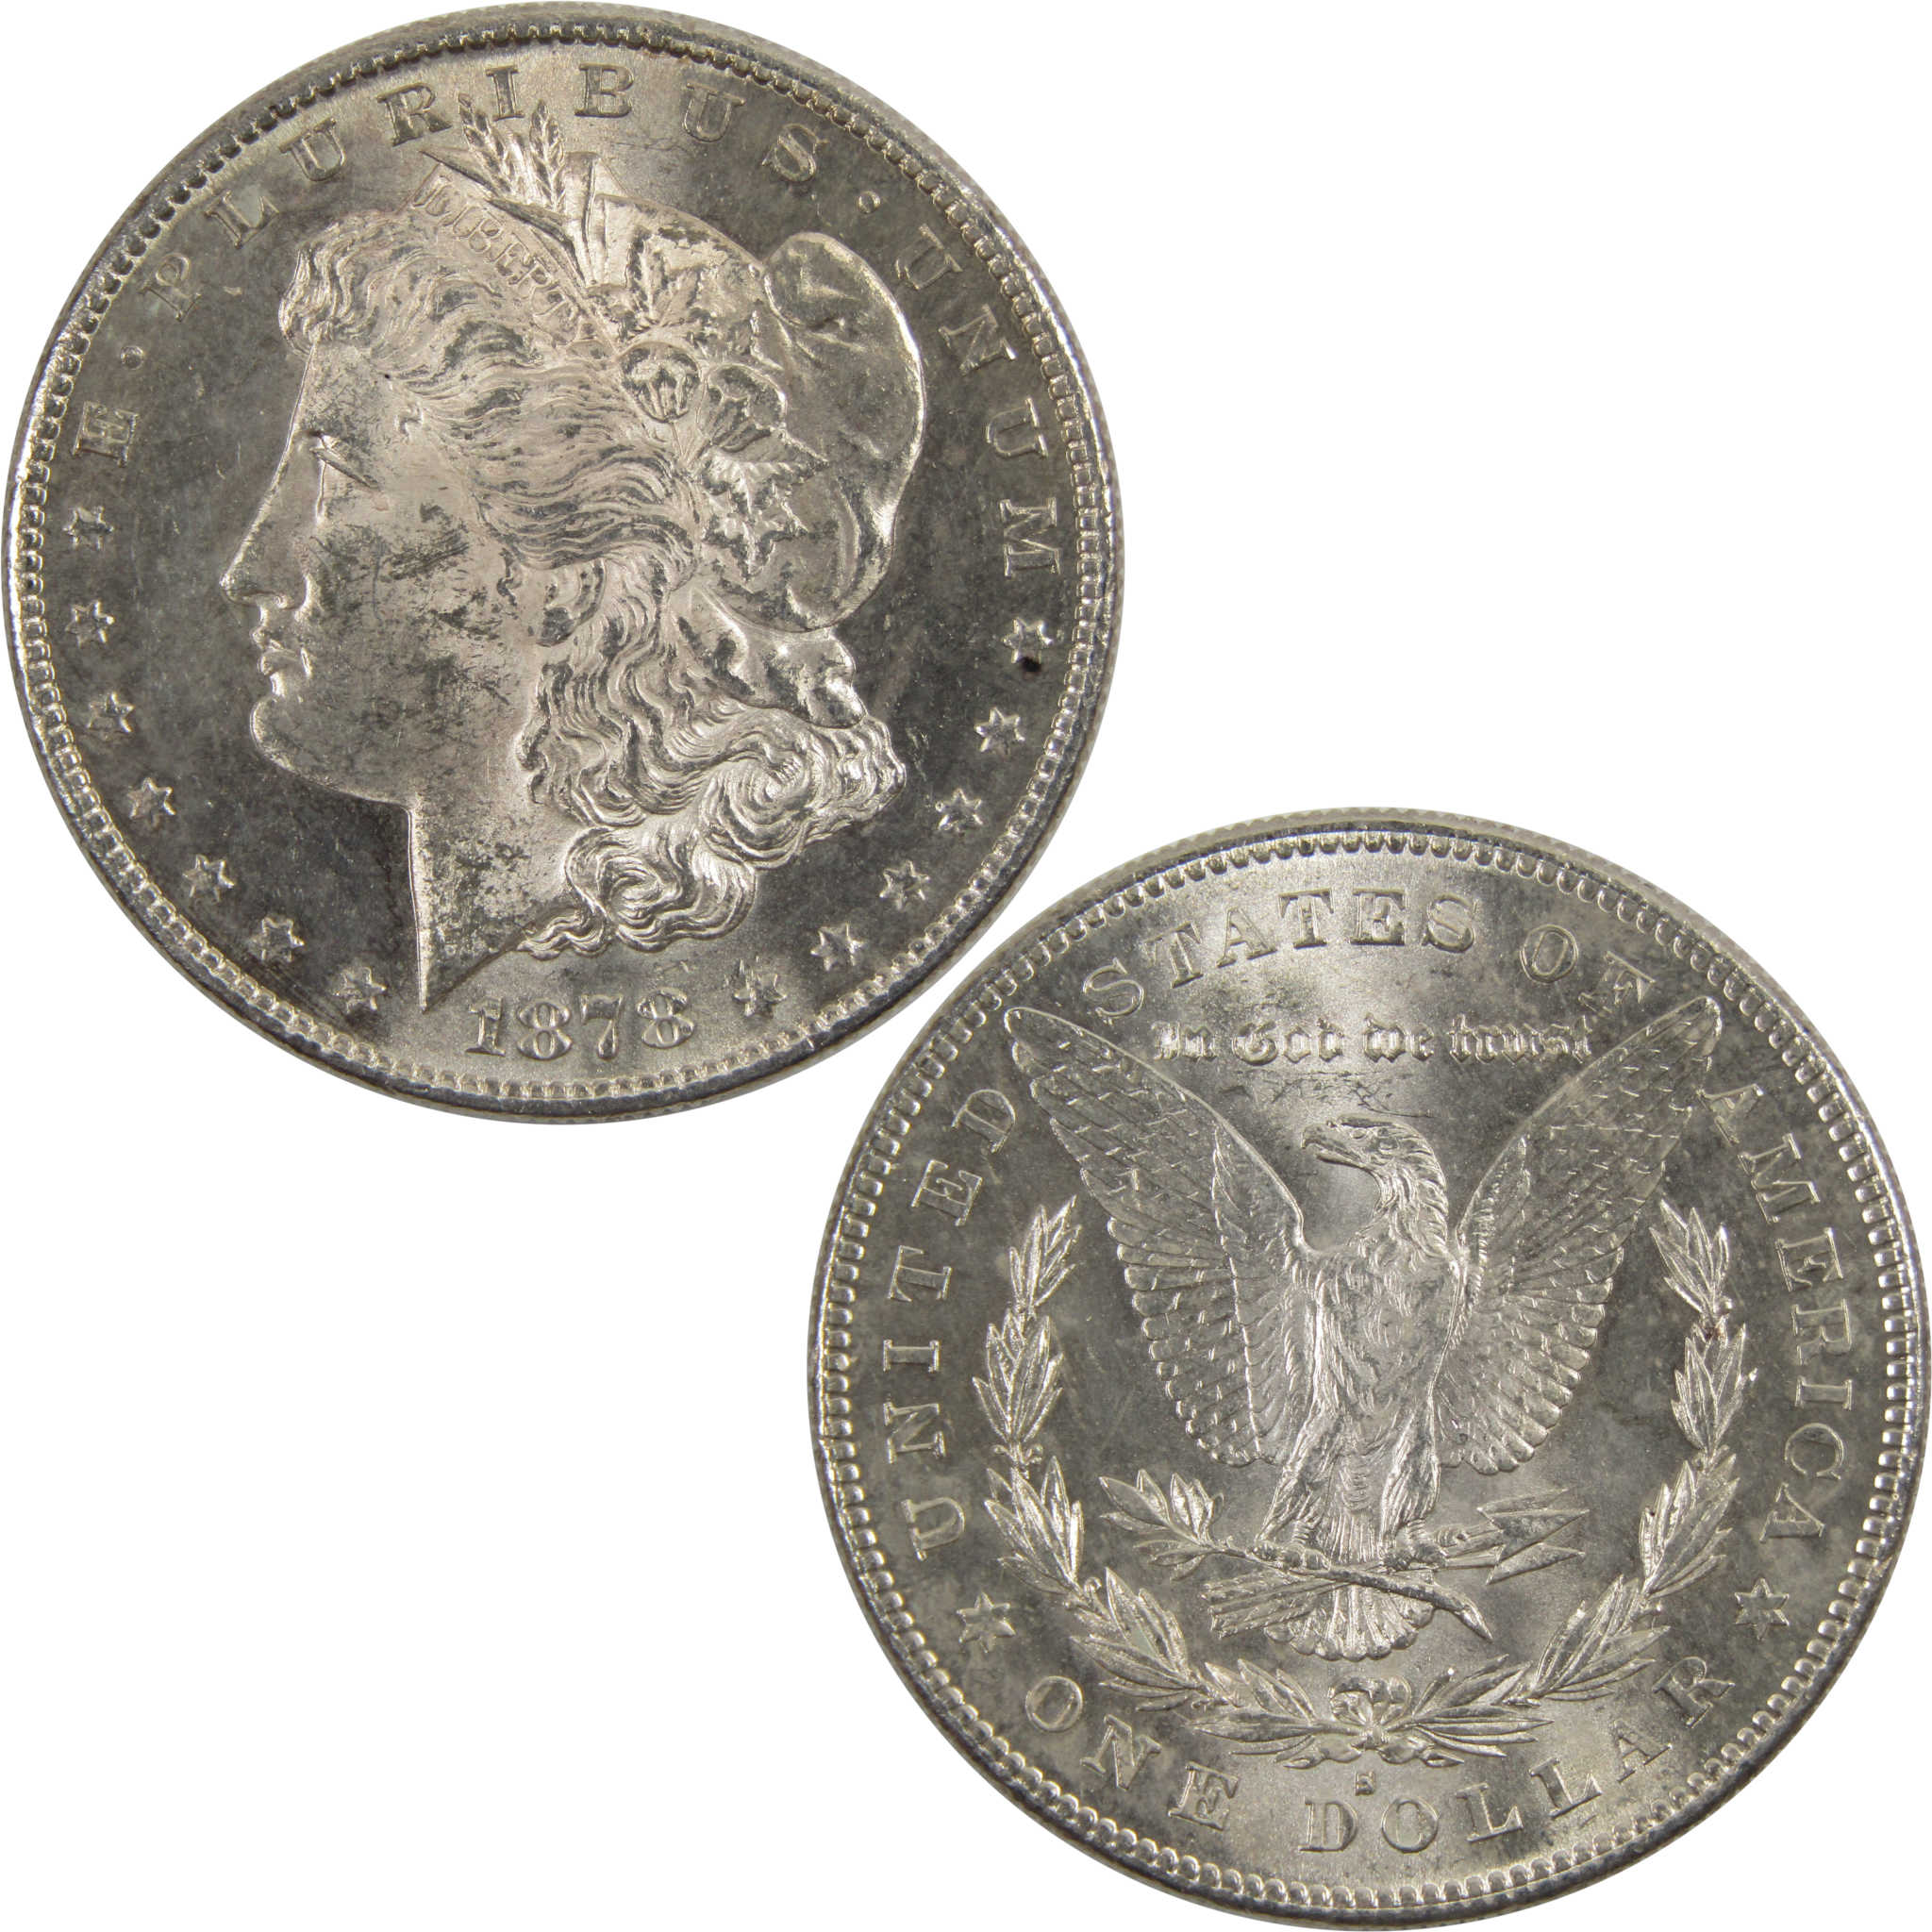 1878 S Morgan Dollar BU Uncirculated 90% Silver $1 Coin SKU:I8235 - Morgan coin - Morgan silver dollar - Morgan silver dollar for sale - Profile Coins &amp; Collectibles